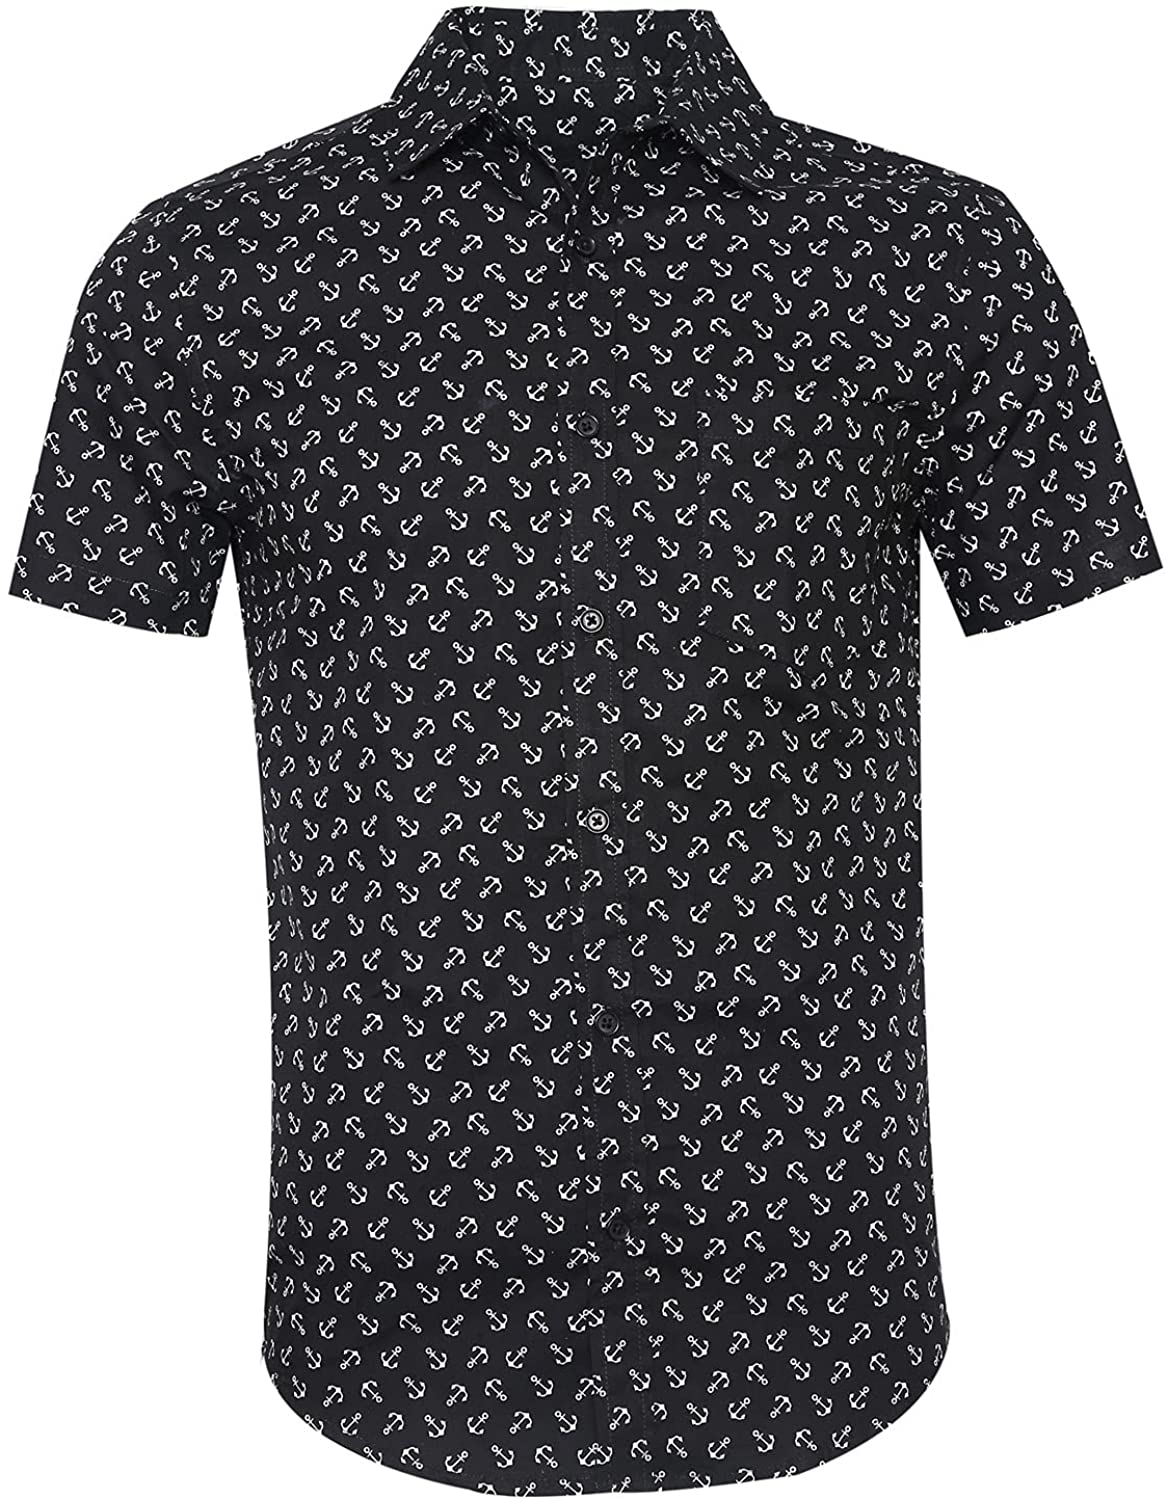 TOPORUS Men's Casual Short Sleeve Printing Pattern Button Down Shirt